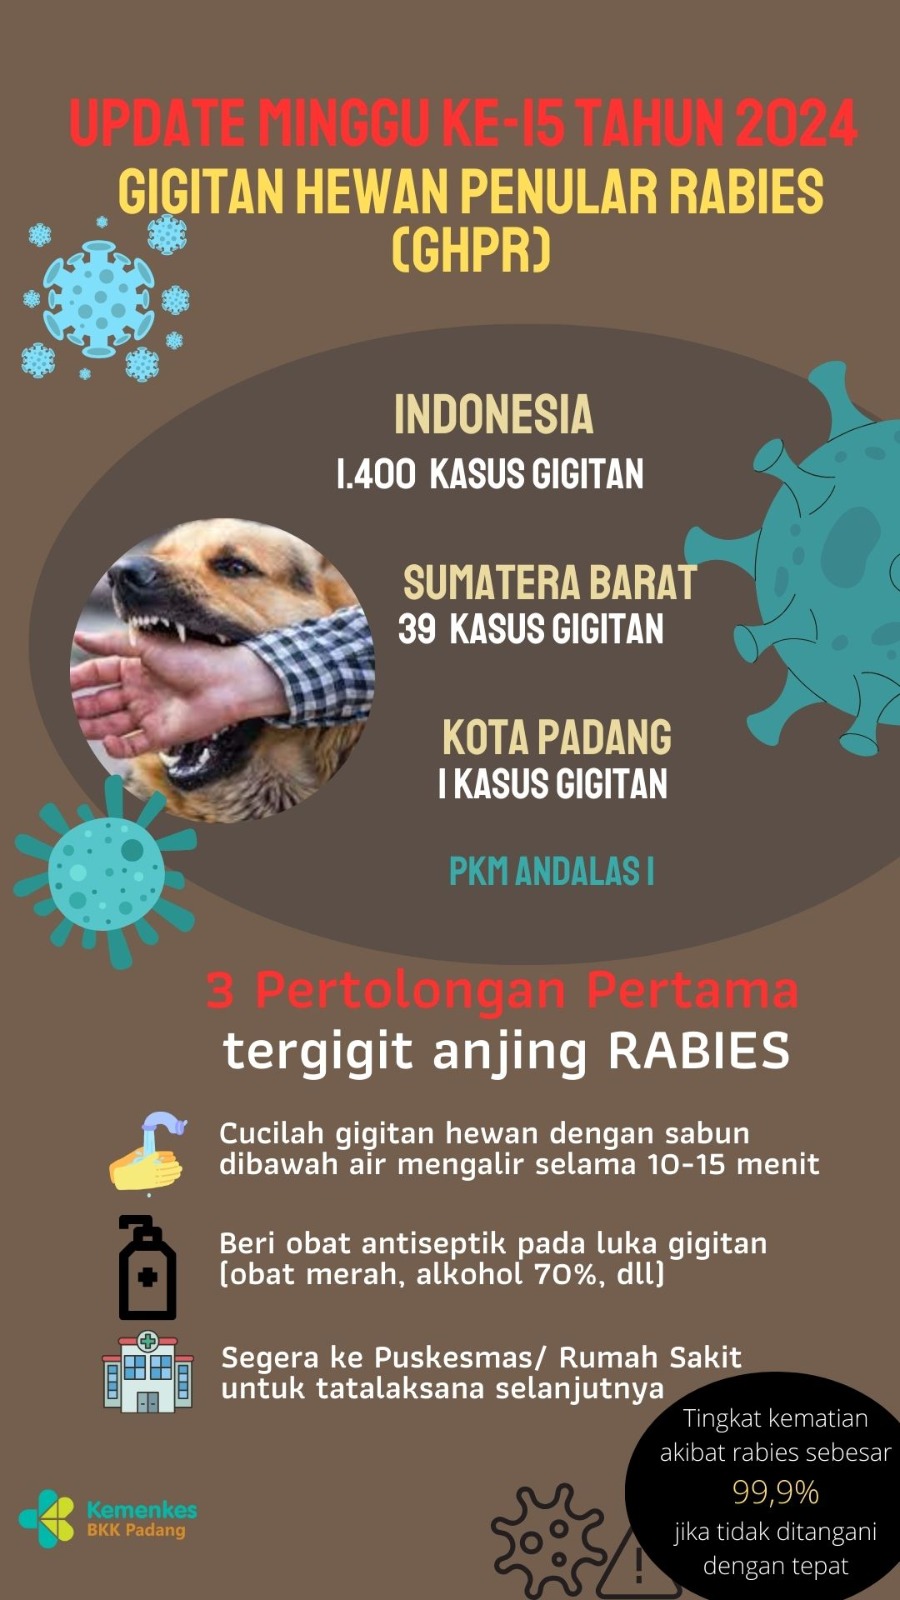 Update Gigitan Hewan Penular Rabies Minggu 15 Tahun 2024